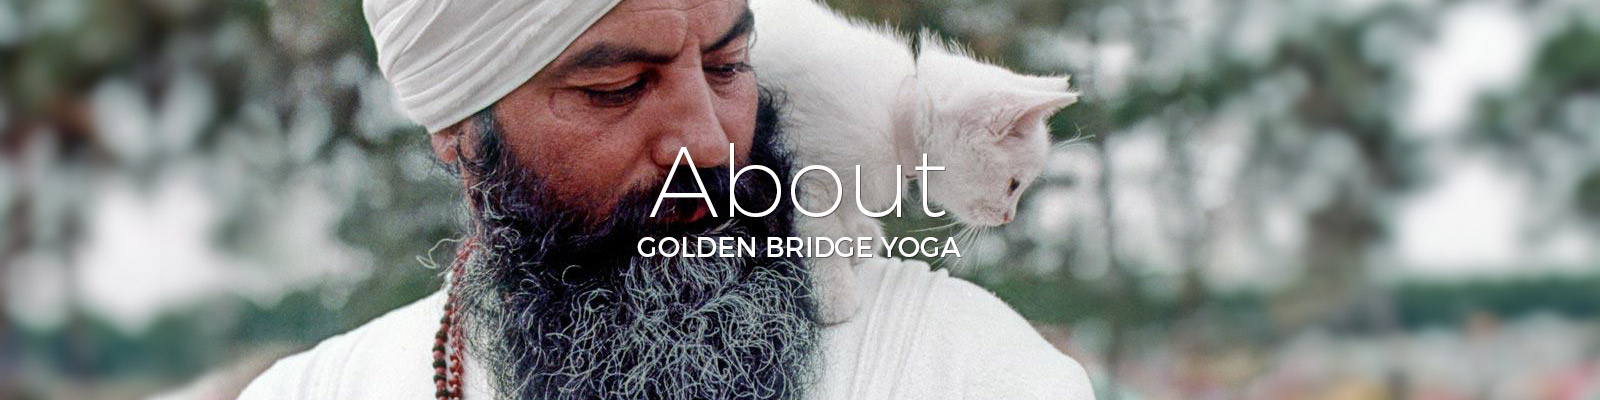 About Golden Bridge Yoga